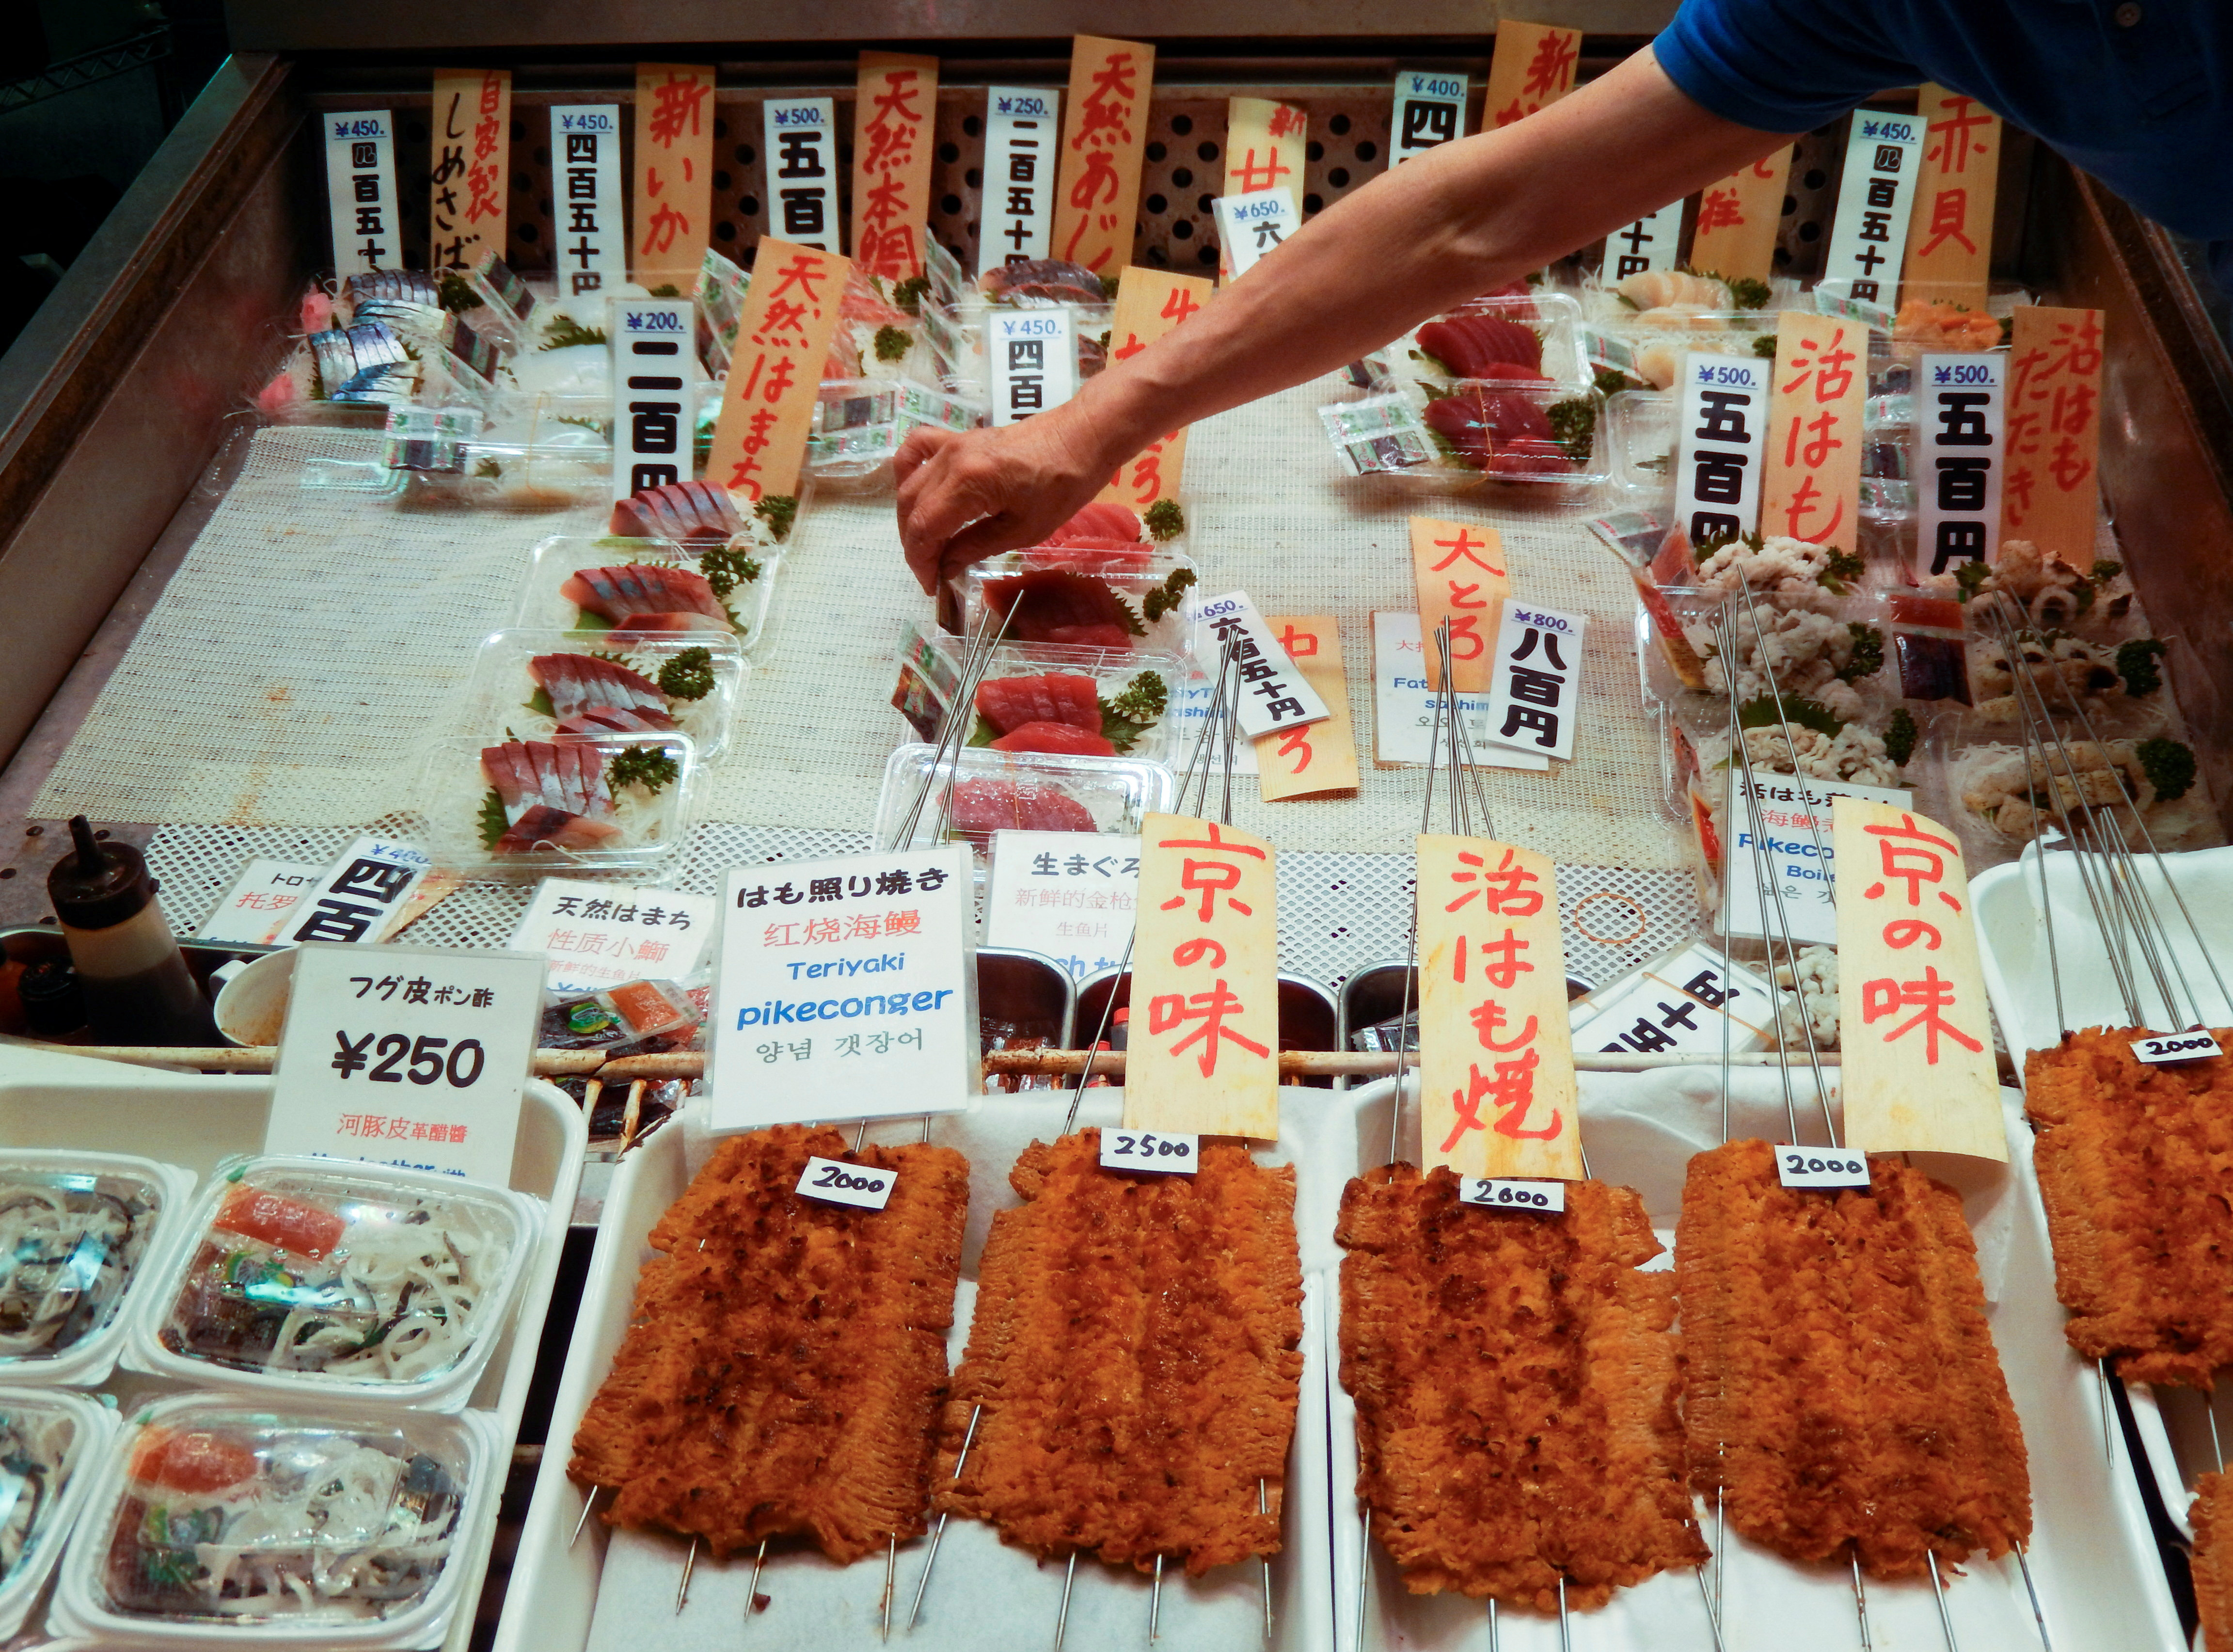 Cooked fish are displayed at the fish store Kimura at Nishiki Market in Kyoto, Japan